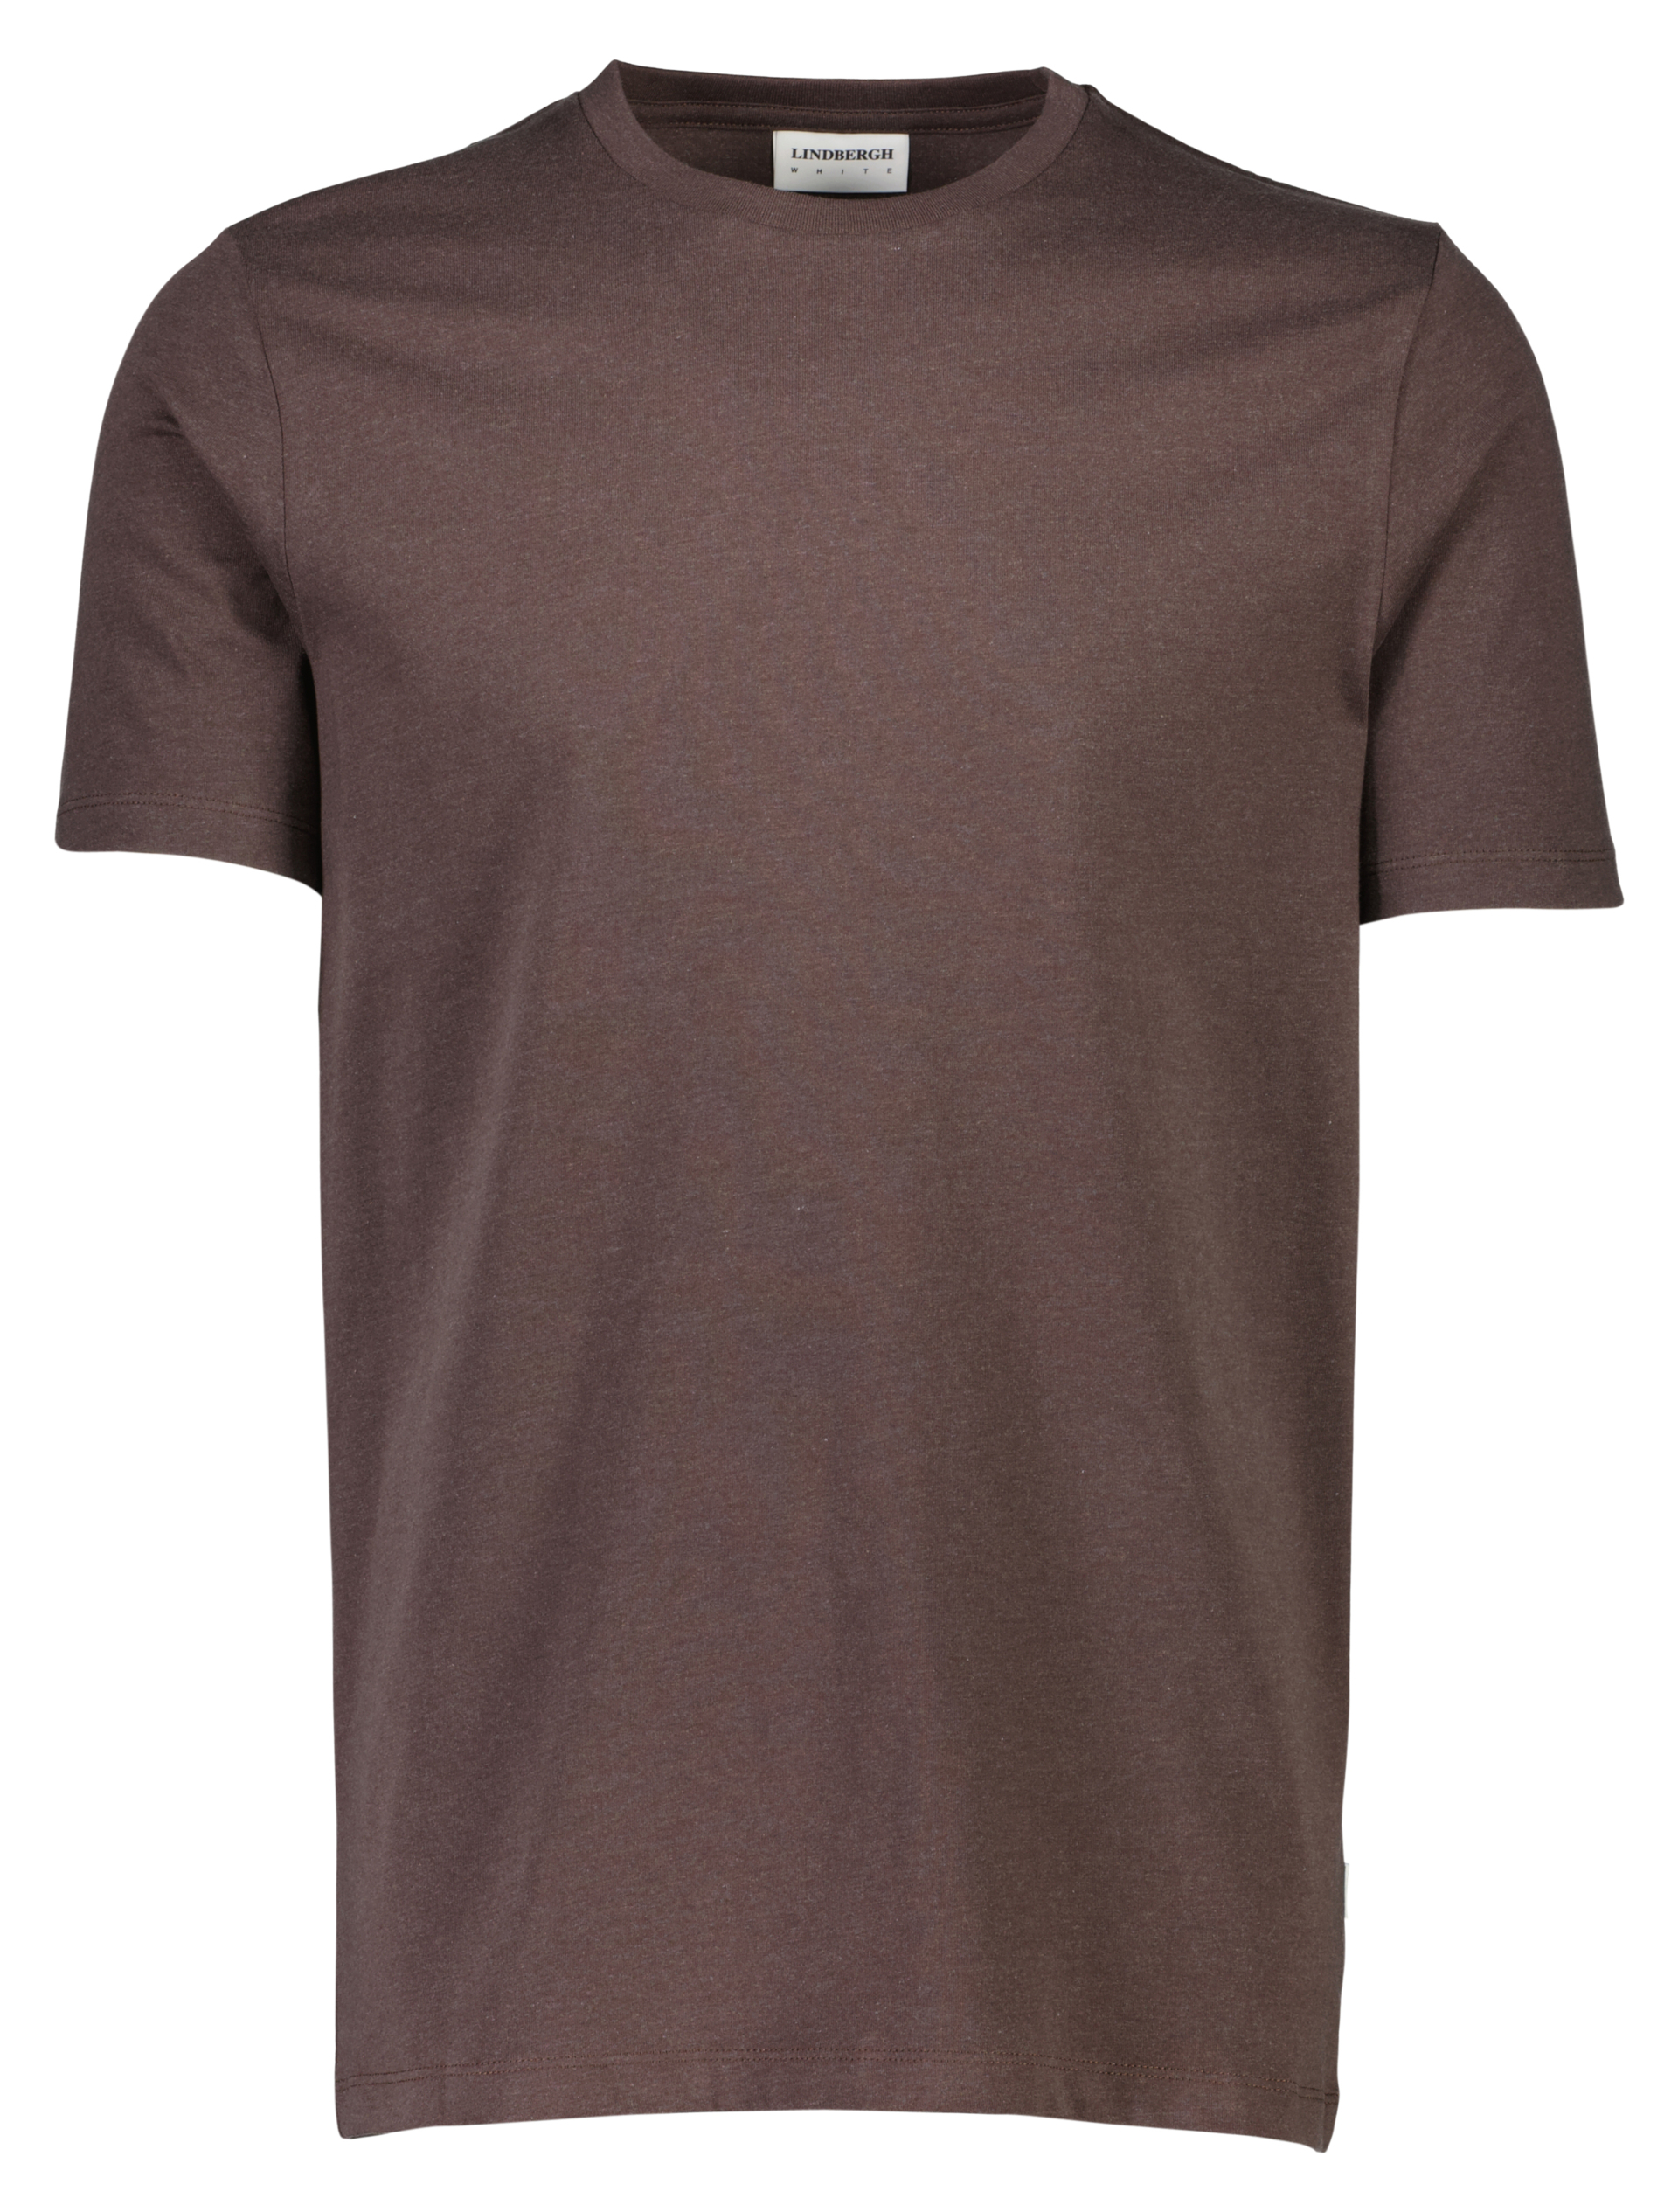 Lindbergh T-shirt braun / brown mel